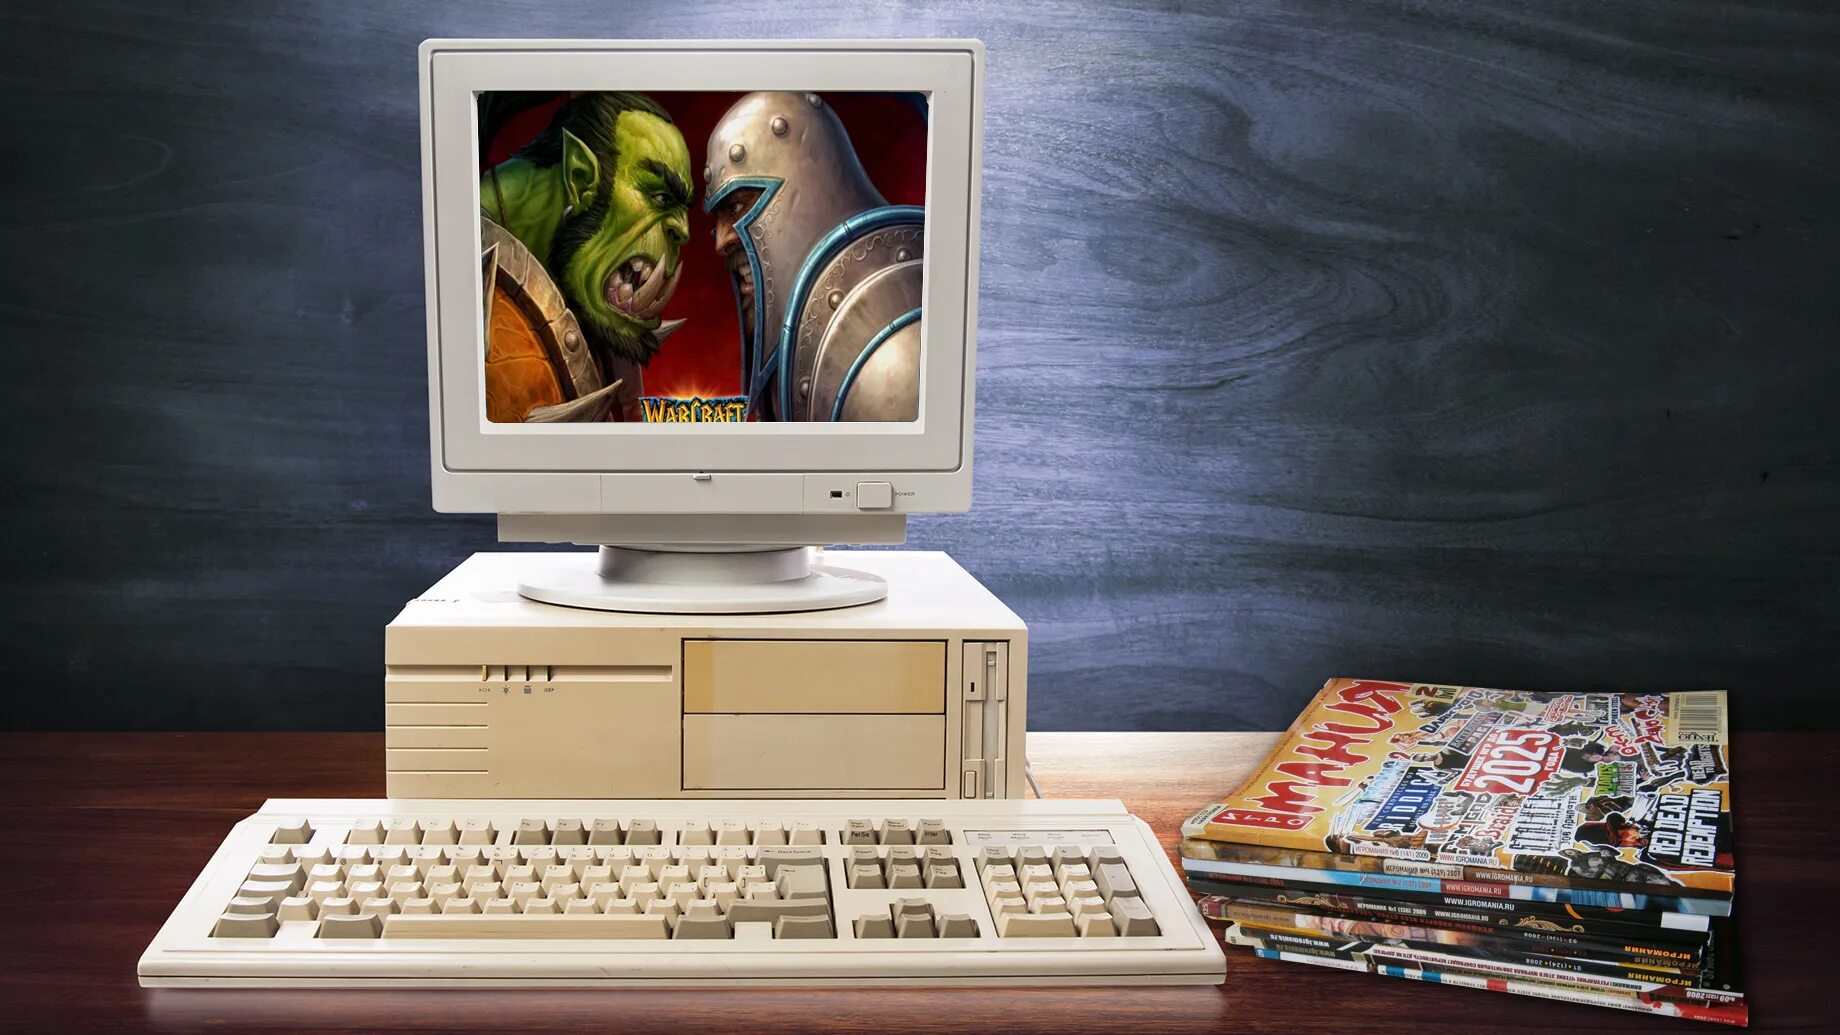 Компьютеры 90 х годов. Компьютер из 90-х. Комьюторы 90х. Компьютер 90ых.